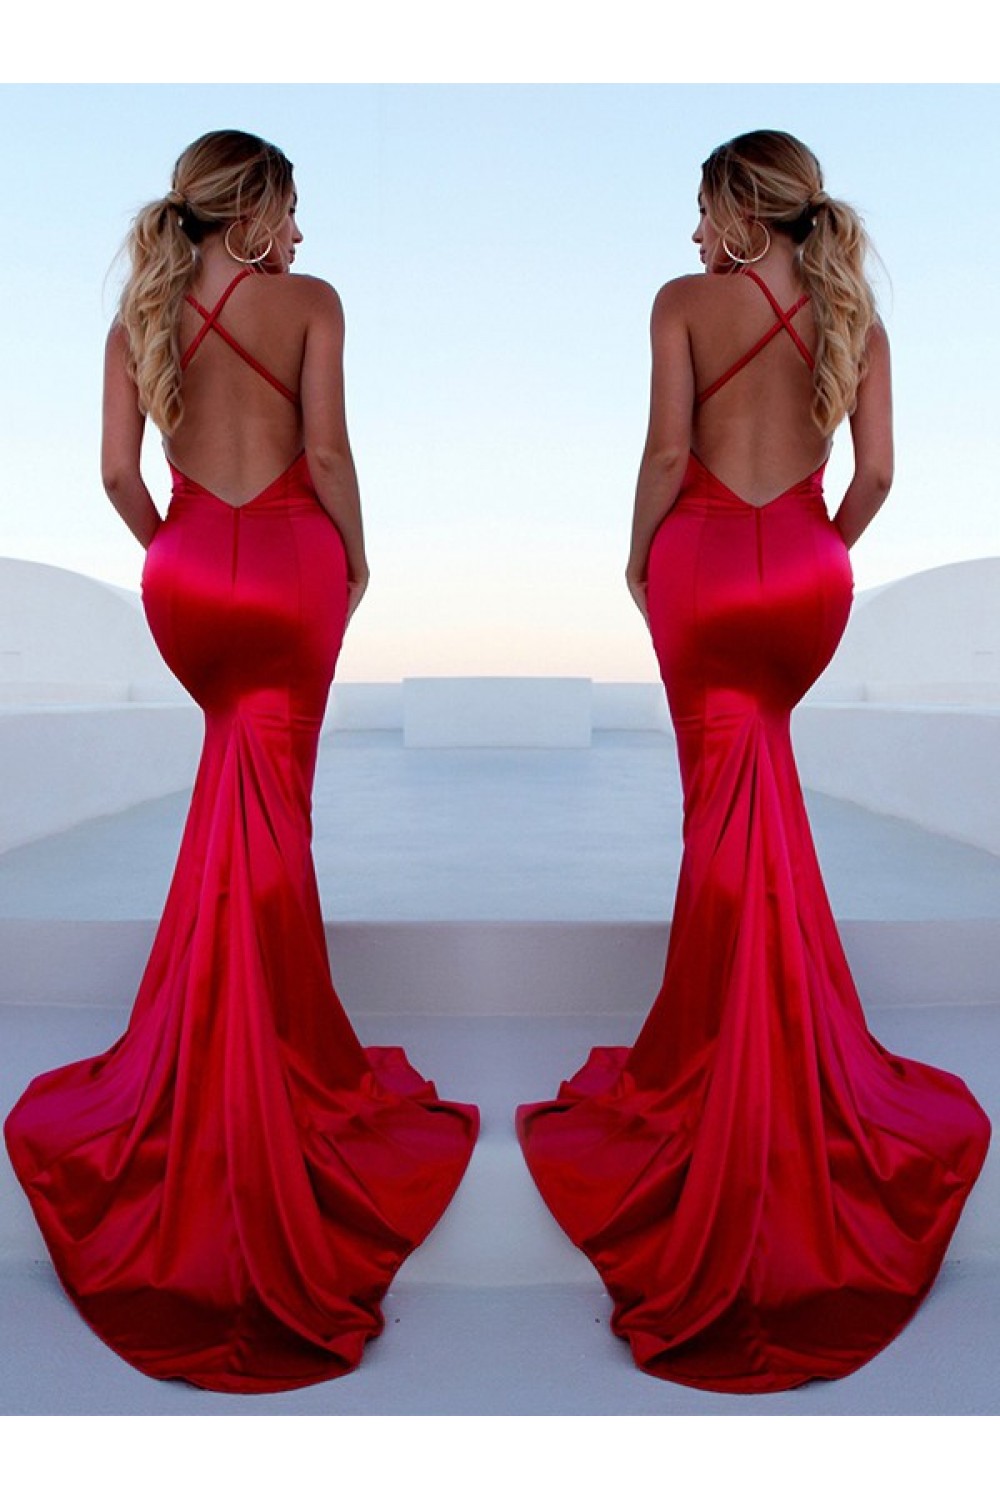 Mermaid VNeck Long Red Prom Dress Formal Evening Dresses 601663